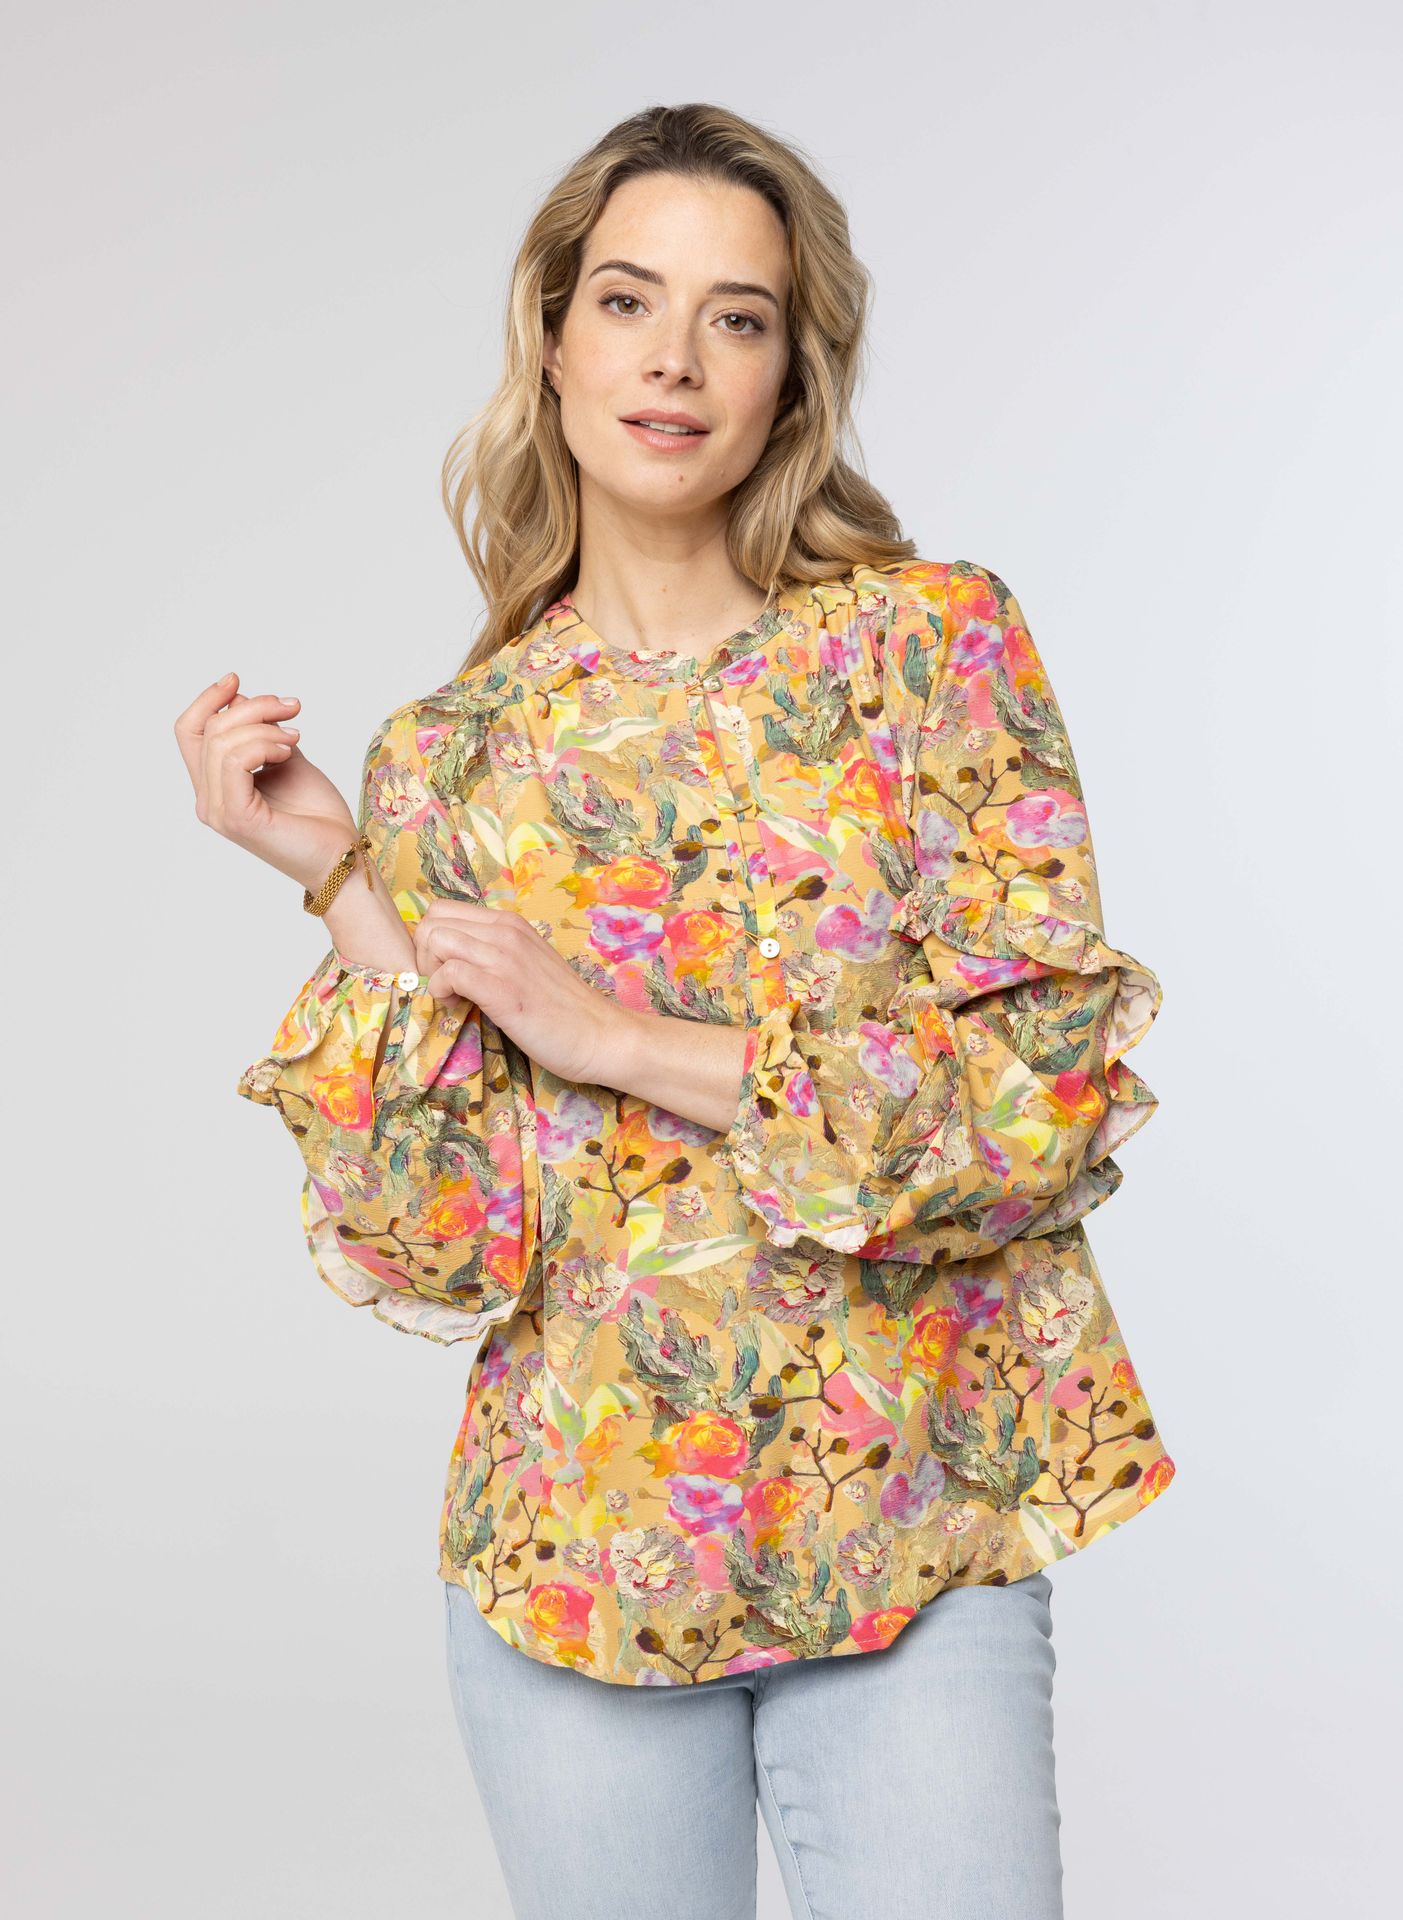 Norah Meerkleurige blouse met ruches multicolor 214144-002